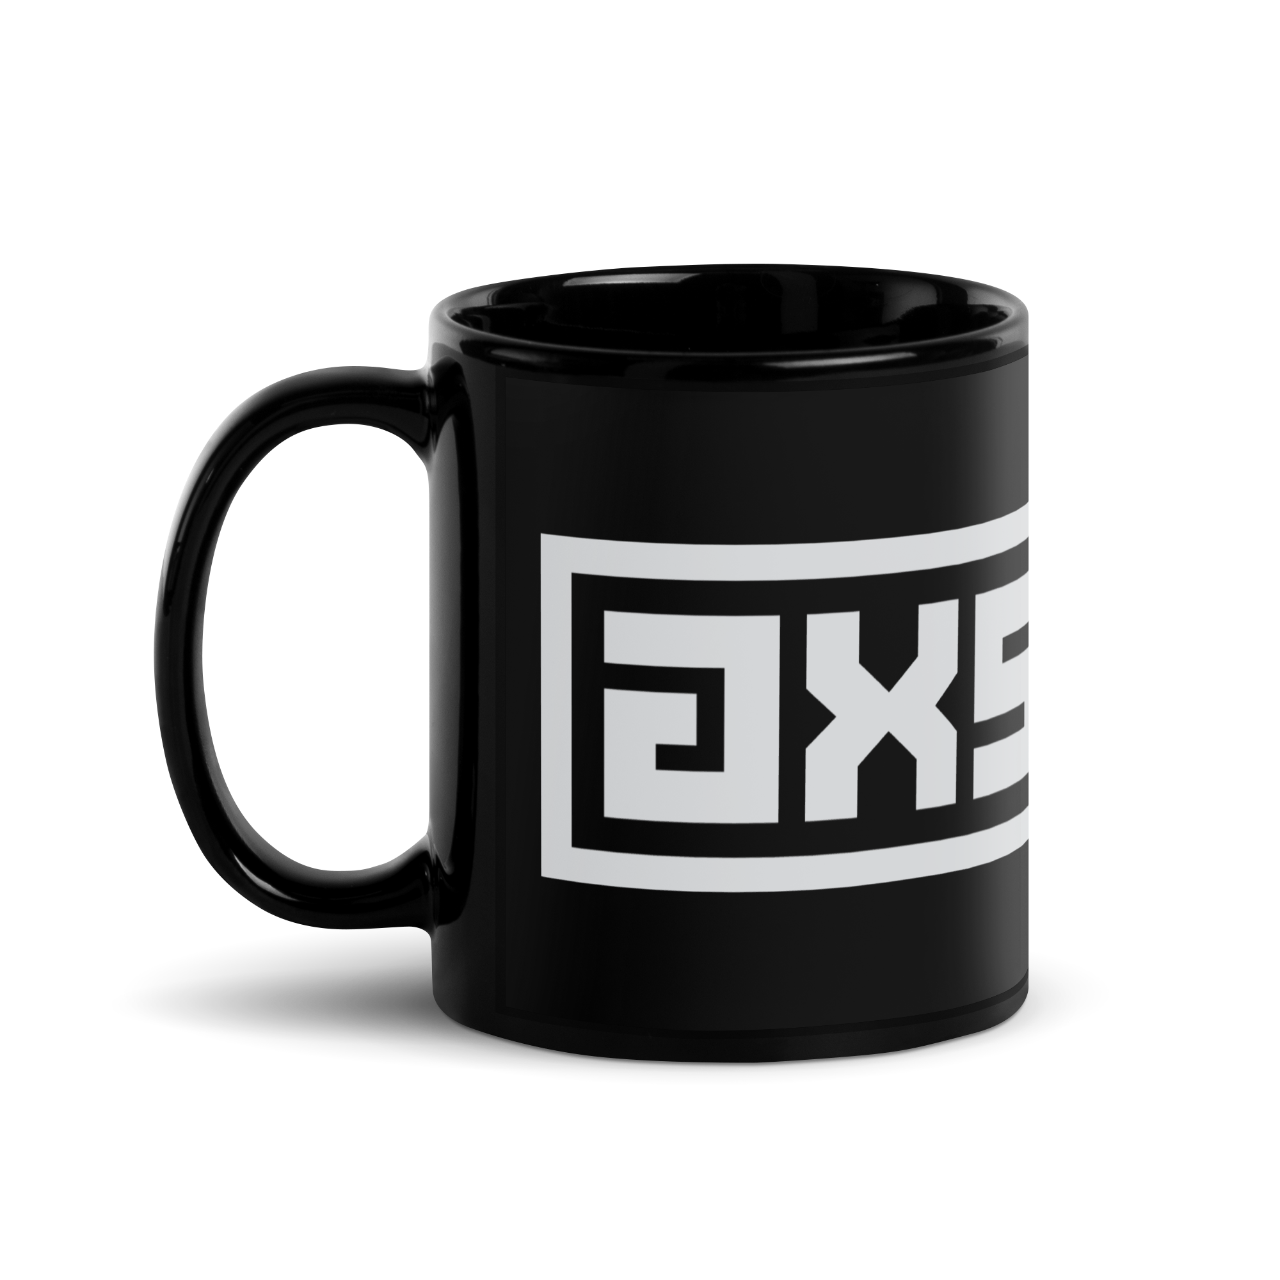 axsgtr axess electronics guitar music industry branded merchandise swag black ceramic coffee mug 11oz